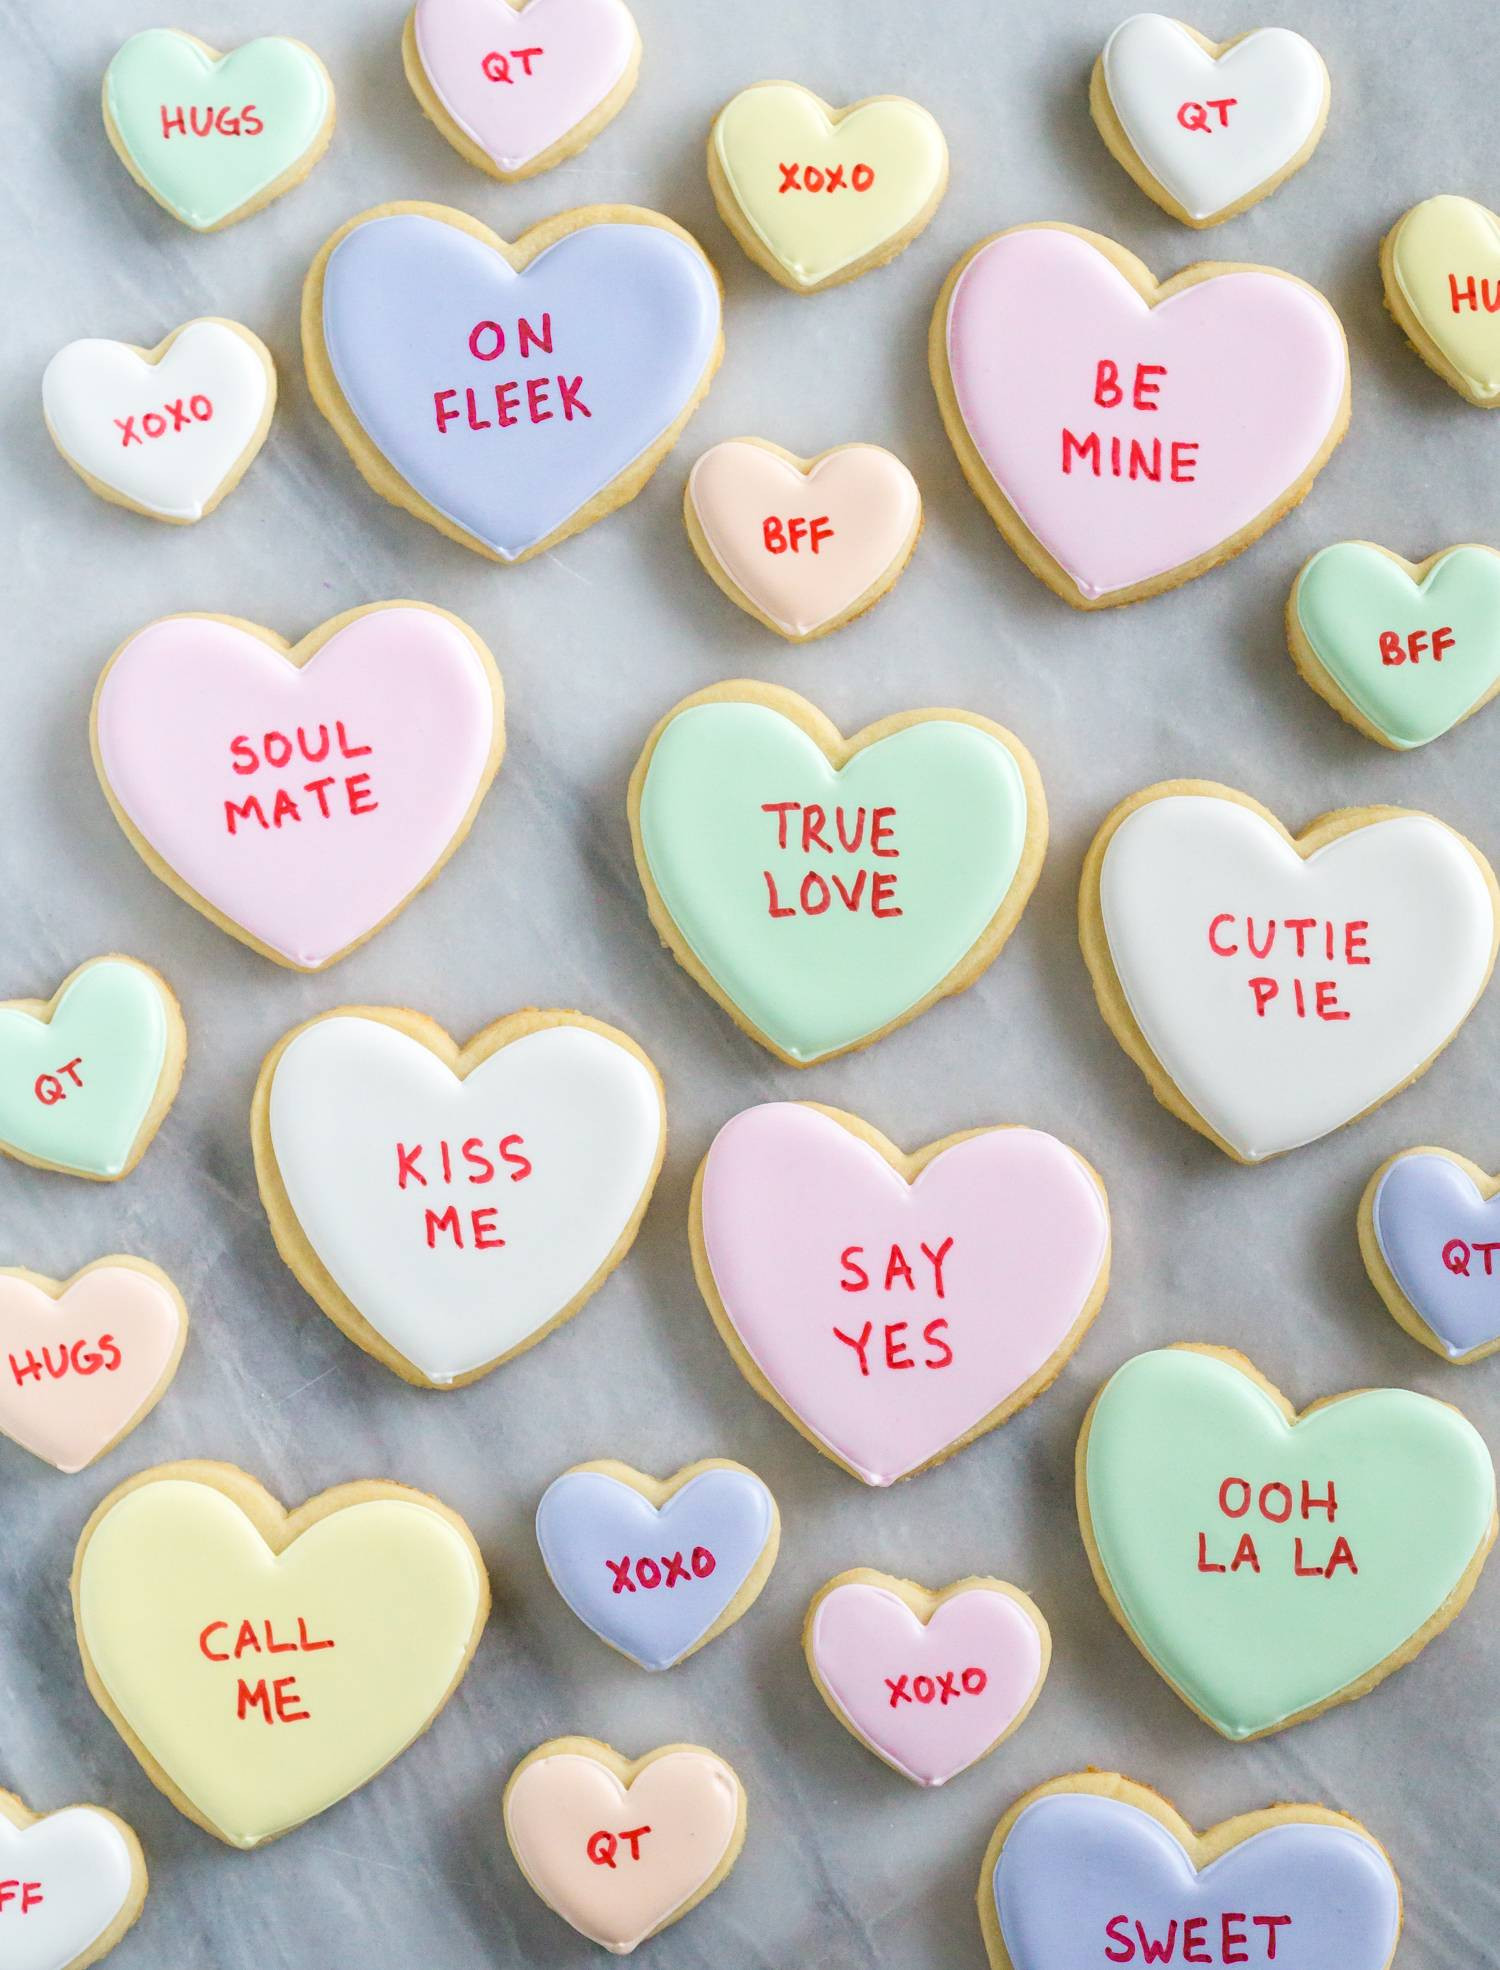 Valentine Sugar Cookies Decorating Ideas
 Conversation Heart Sugar Cookies